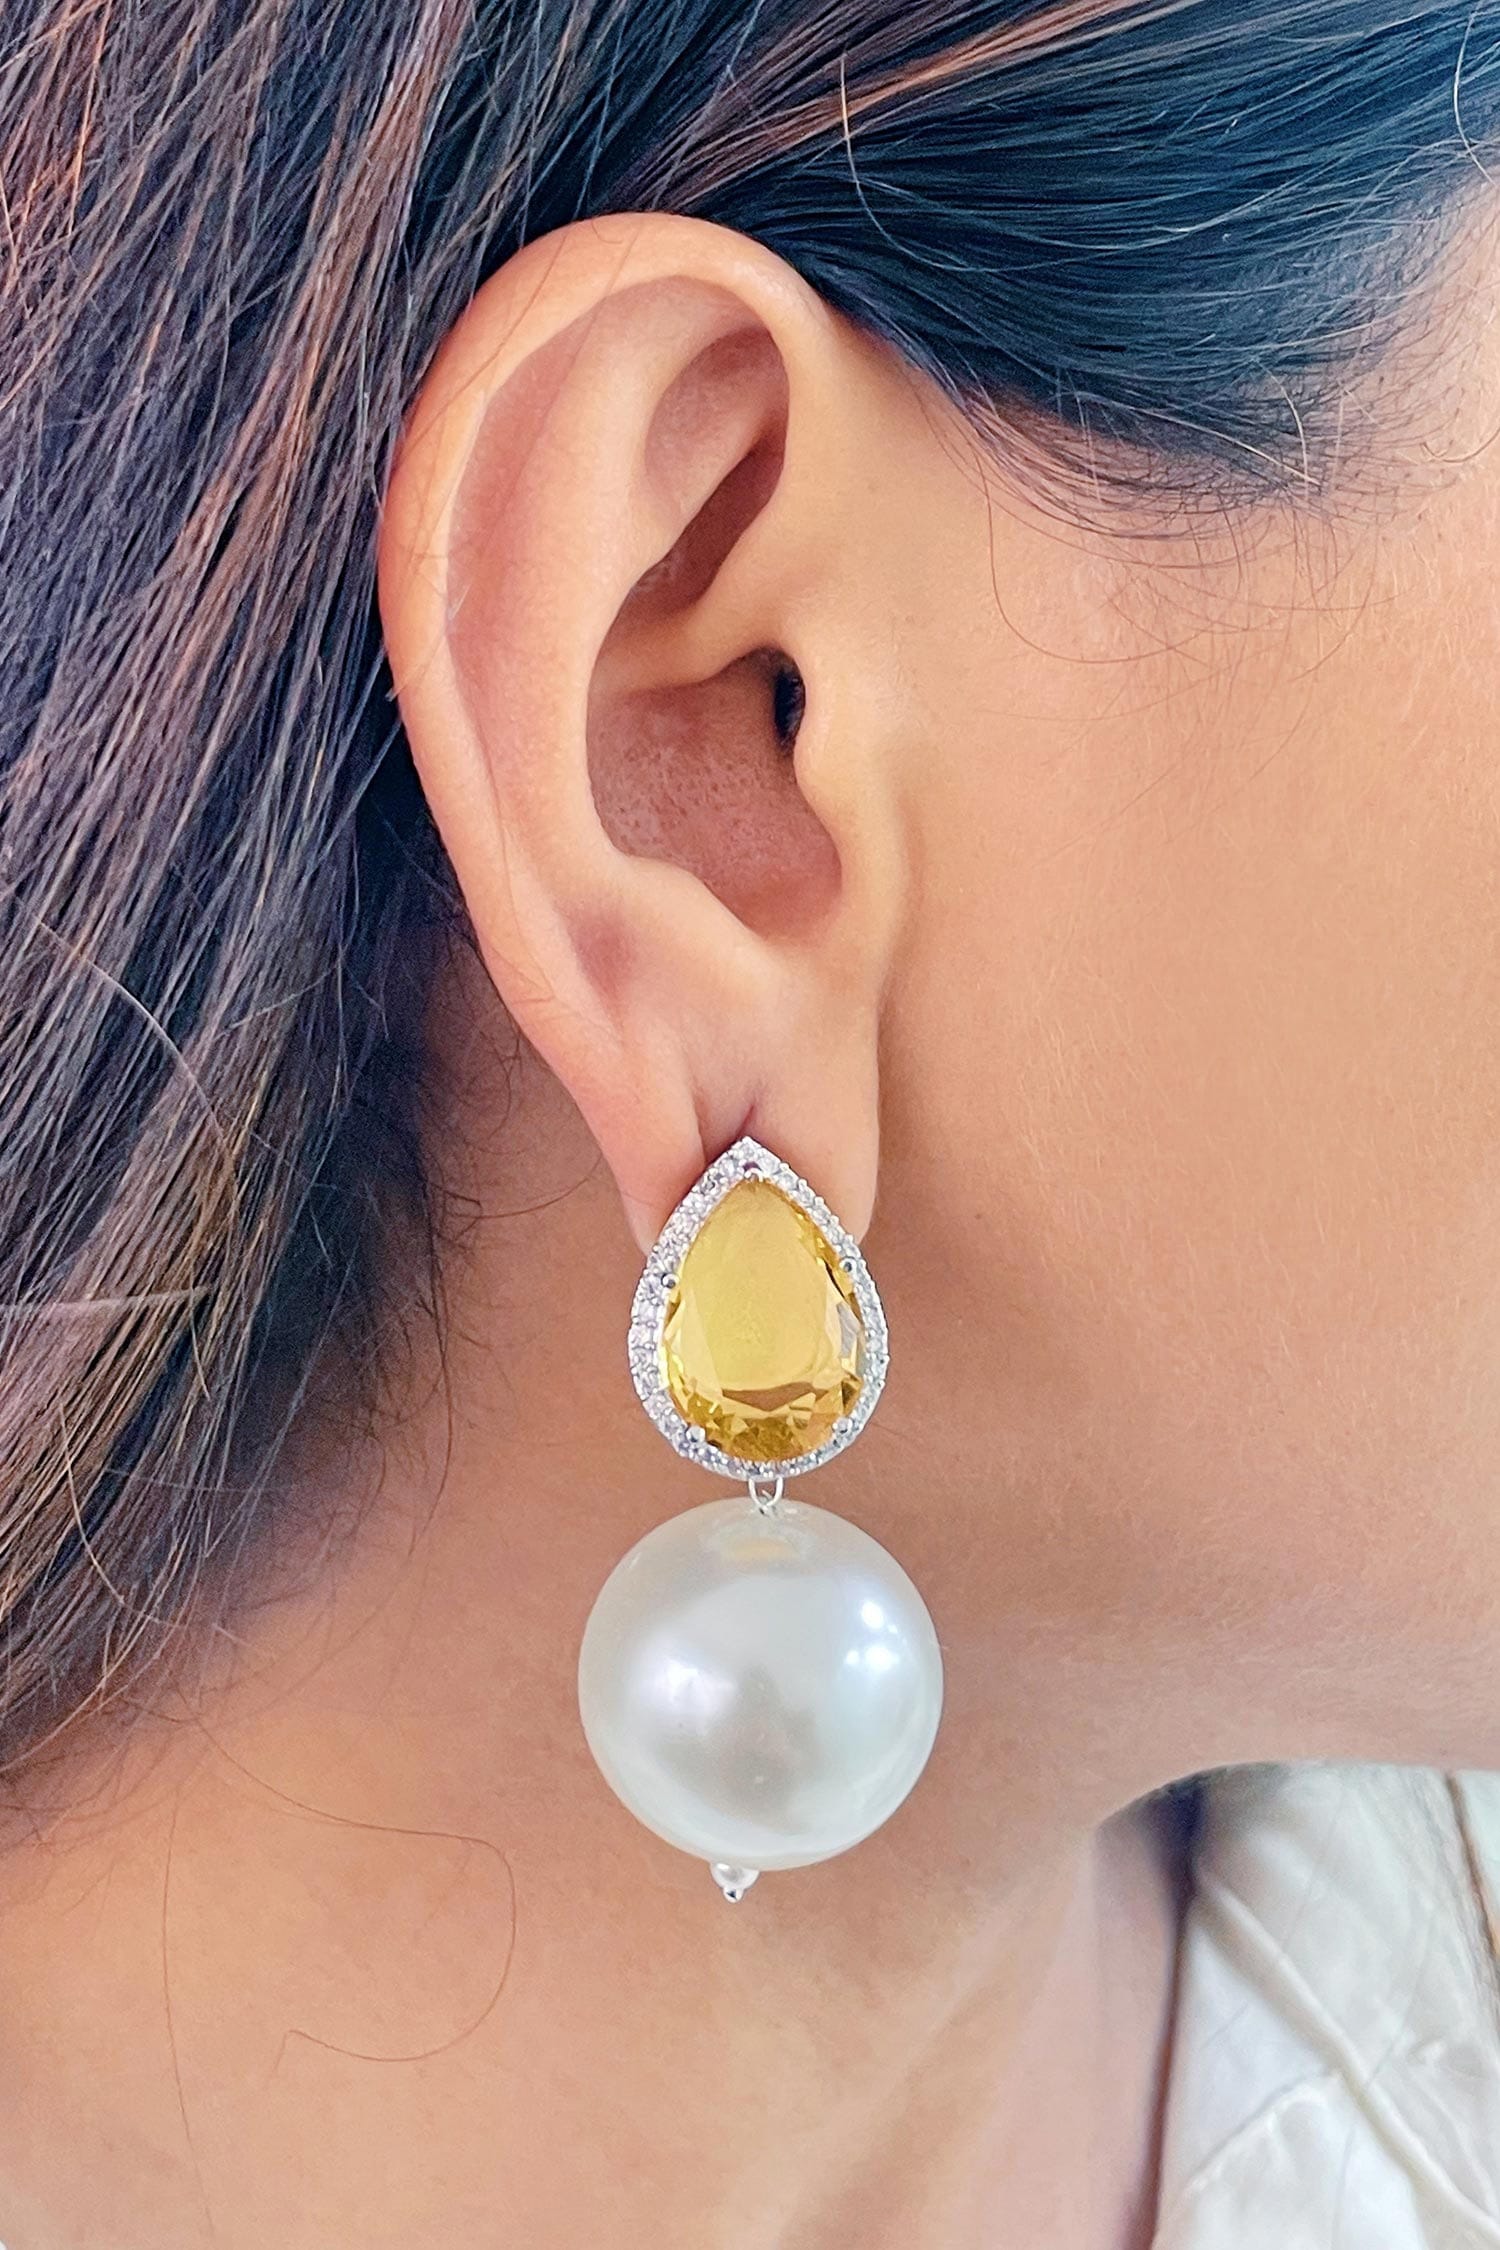 Pearl earrings gemstone sterling silver handmade earrings at ₹2950 | Azilaa